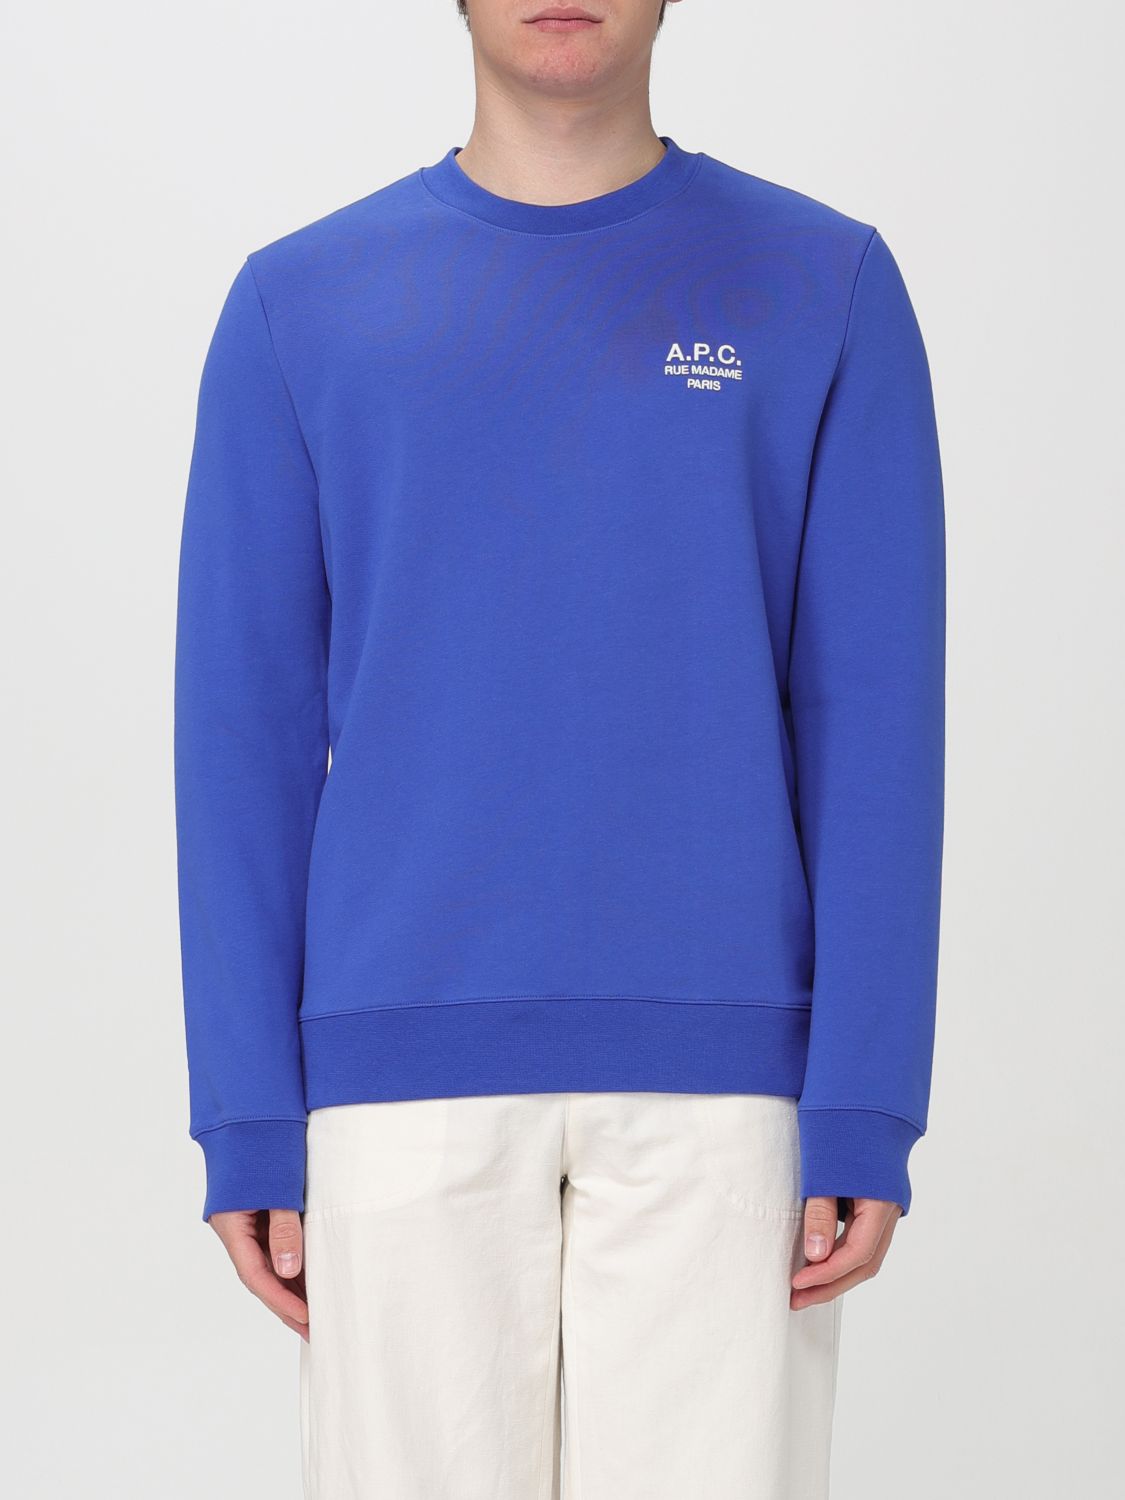 Shop Apc Sweatshirt A.p.c. Men Color Blue 1